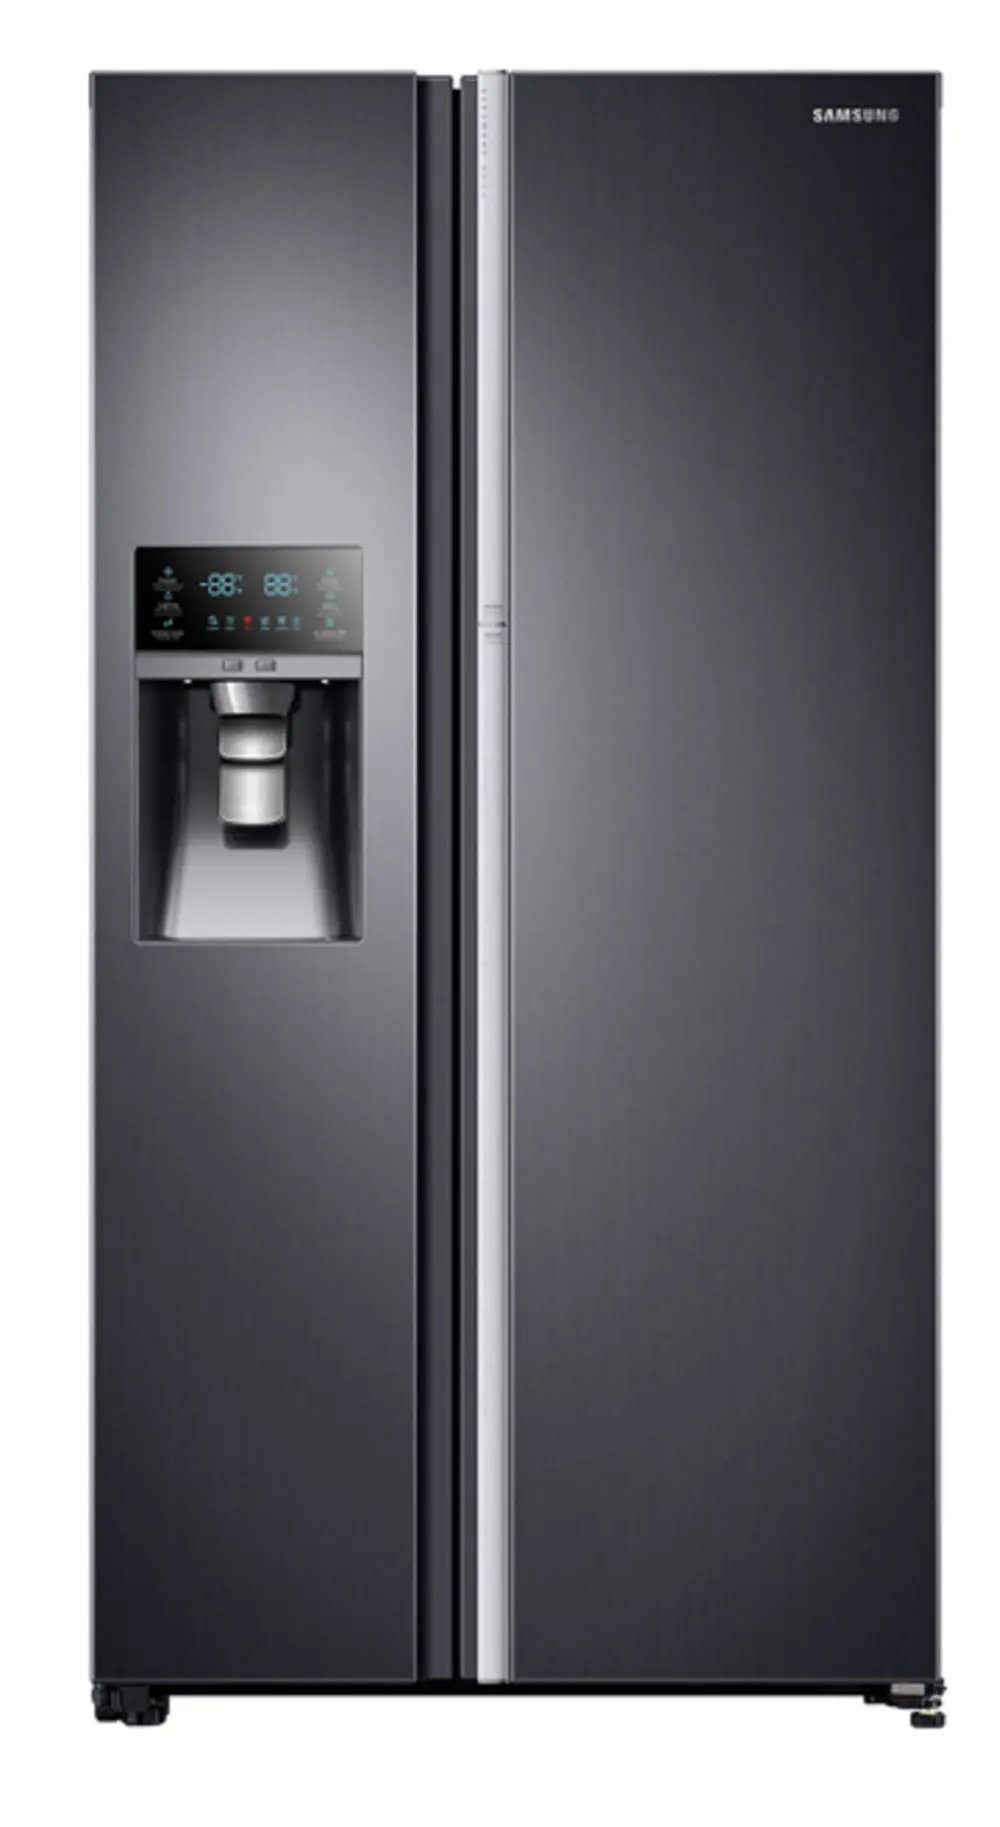 RH22H9010SG Samsung Black Stainless Steel Counter Depth Refrigerator - 36 Inch-1